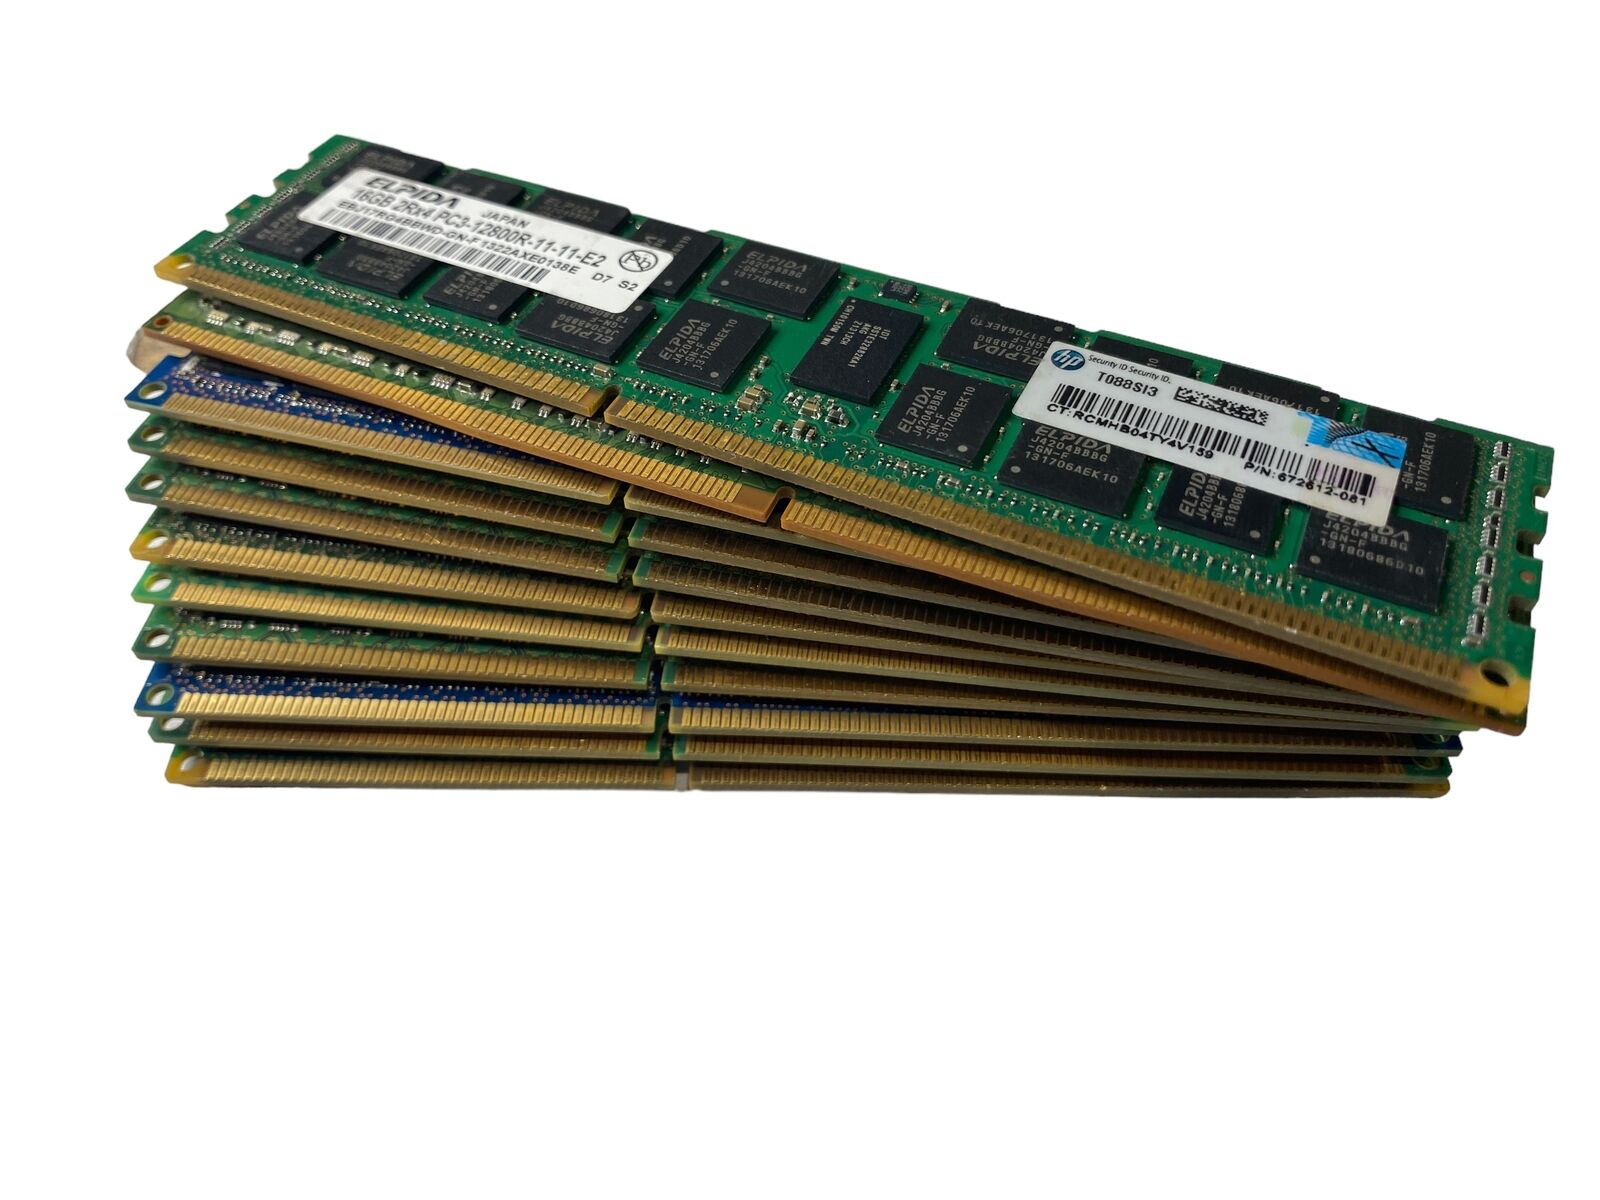 Mixed Brands 8GB | PC3 12800U Desktop RAM | Lot of 10